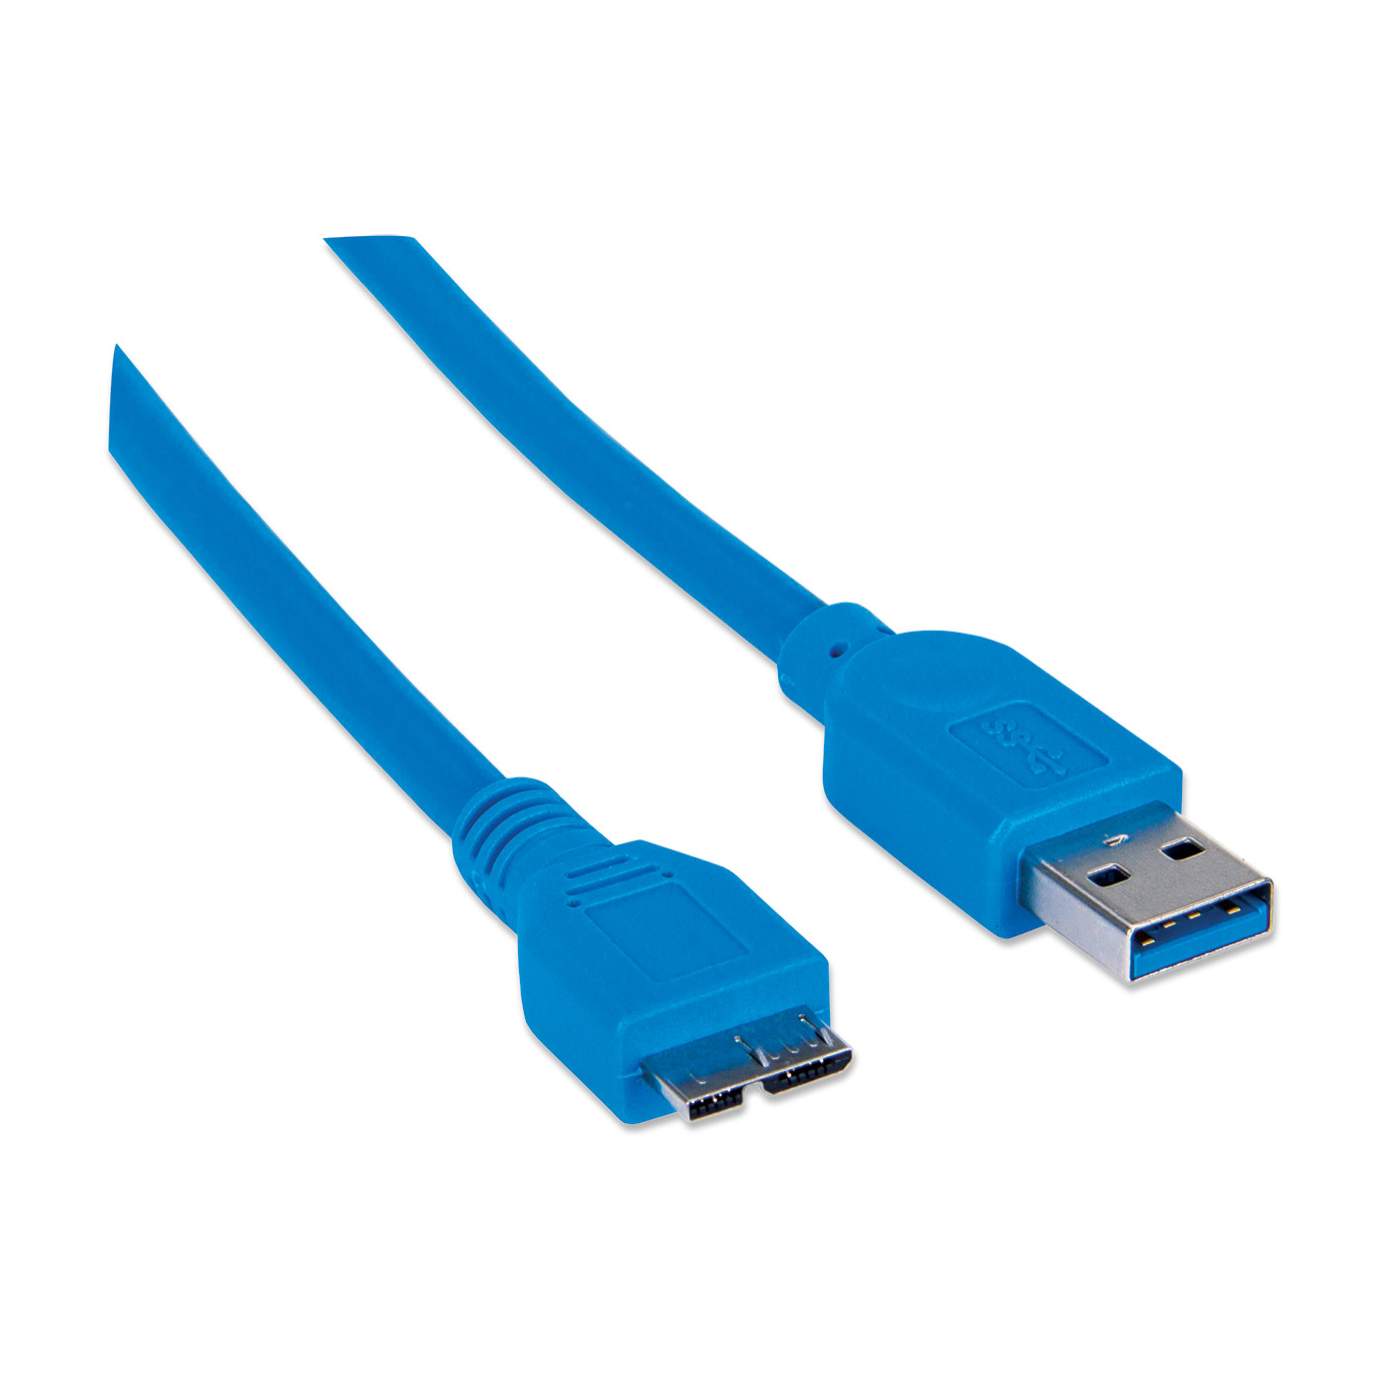  Cable USB 3.0, ITANDA 3.3 pies USB 3.0 A a Micro B